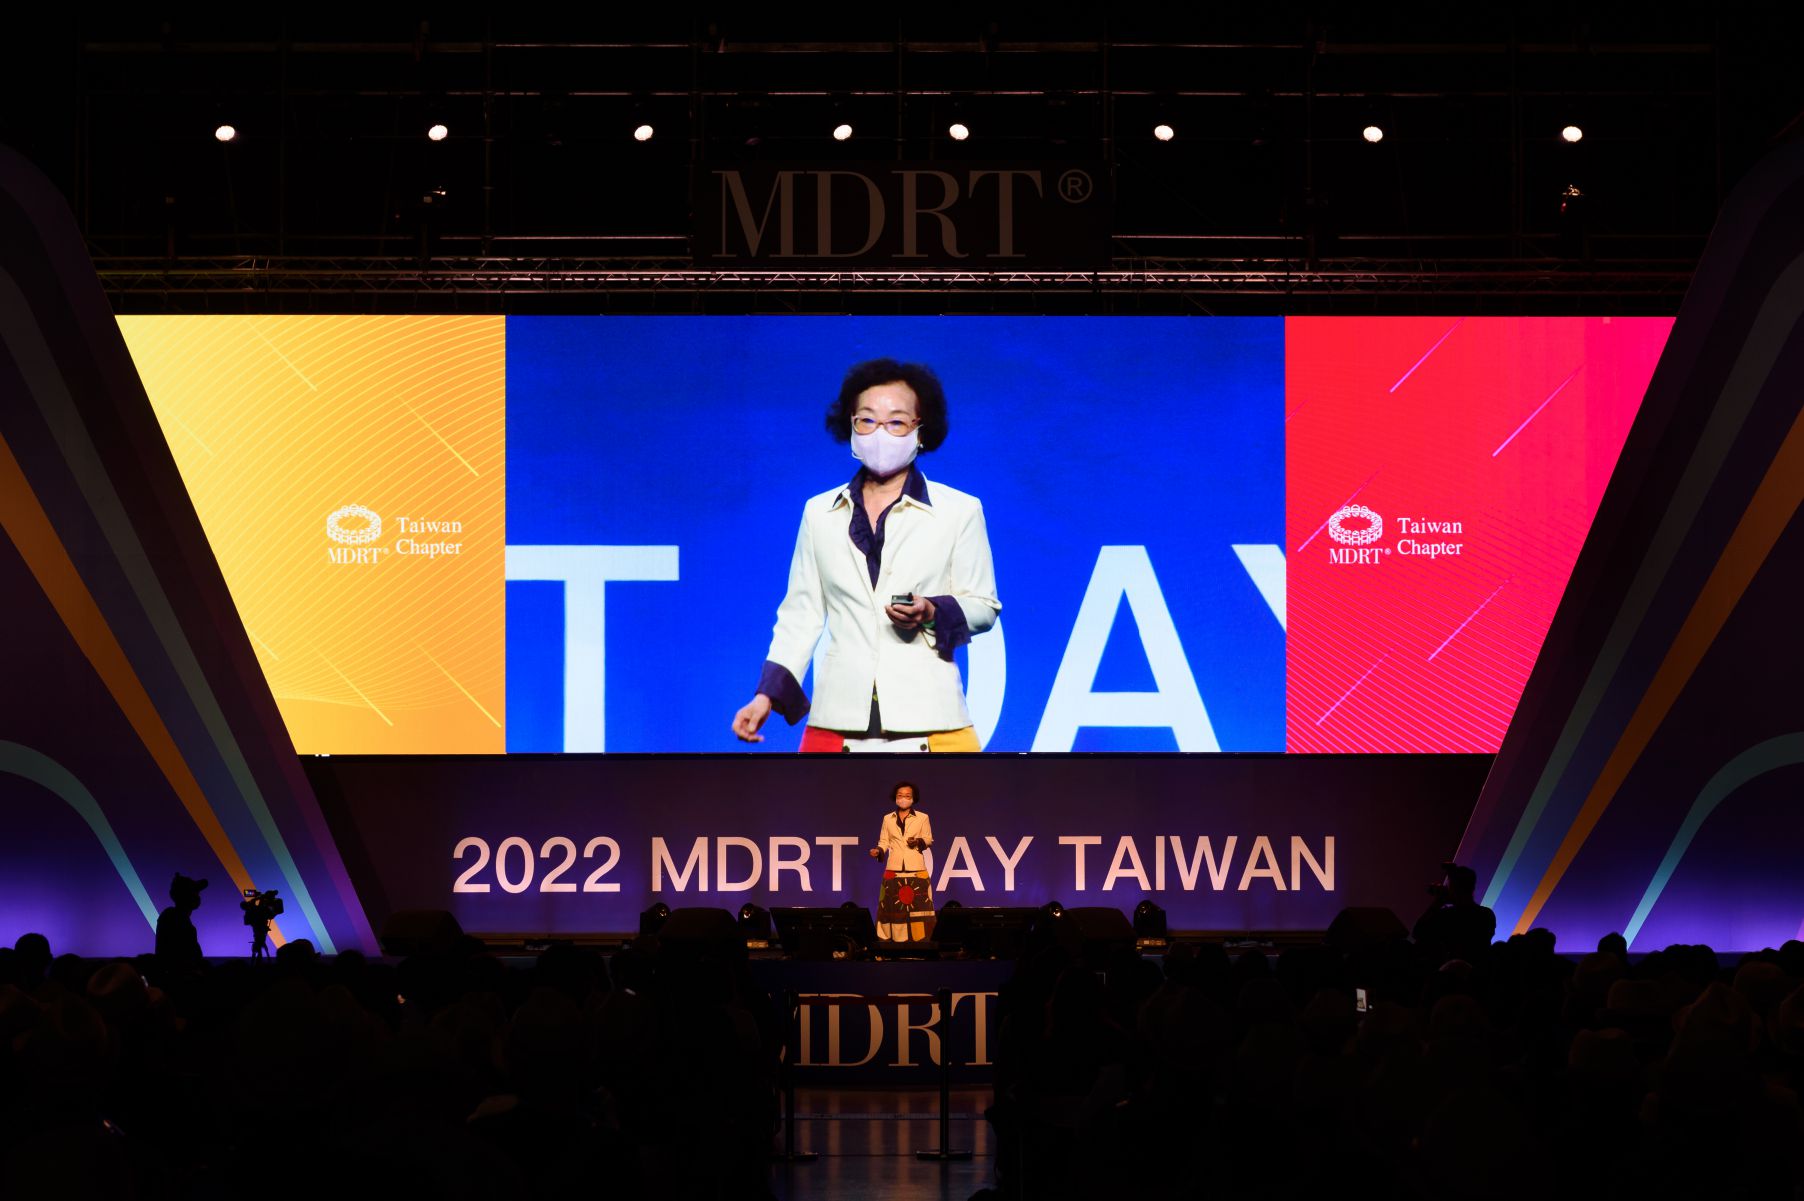 2022 MDRT DAY TAIWAN